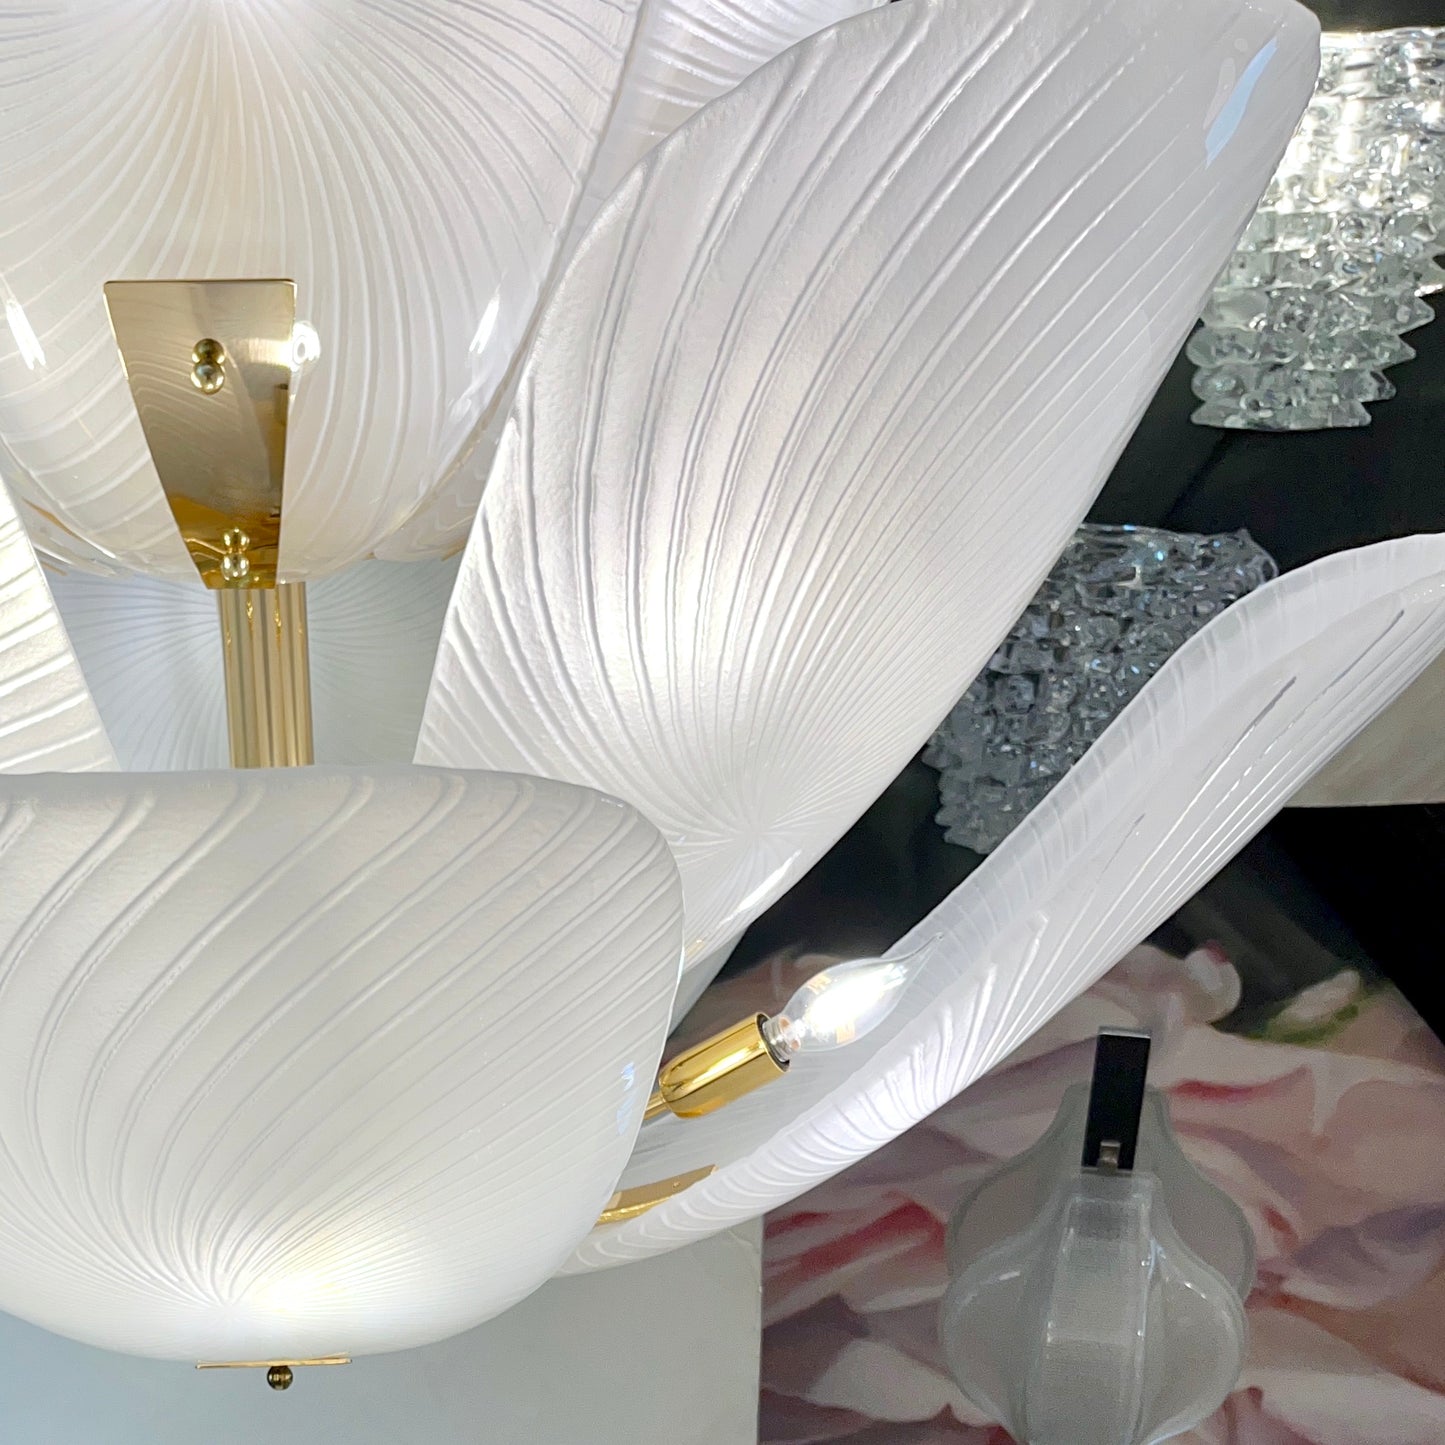 Bespoke Italian Art Nouveau Organic Design White Murano Glass Tulip Chandelier